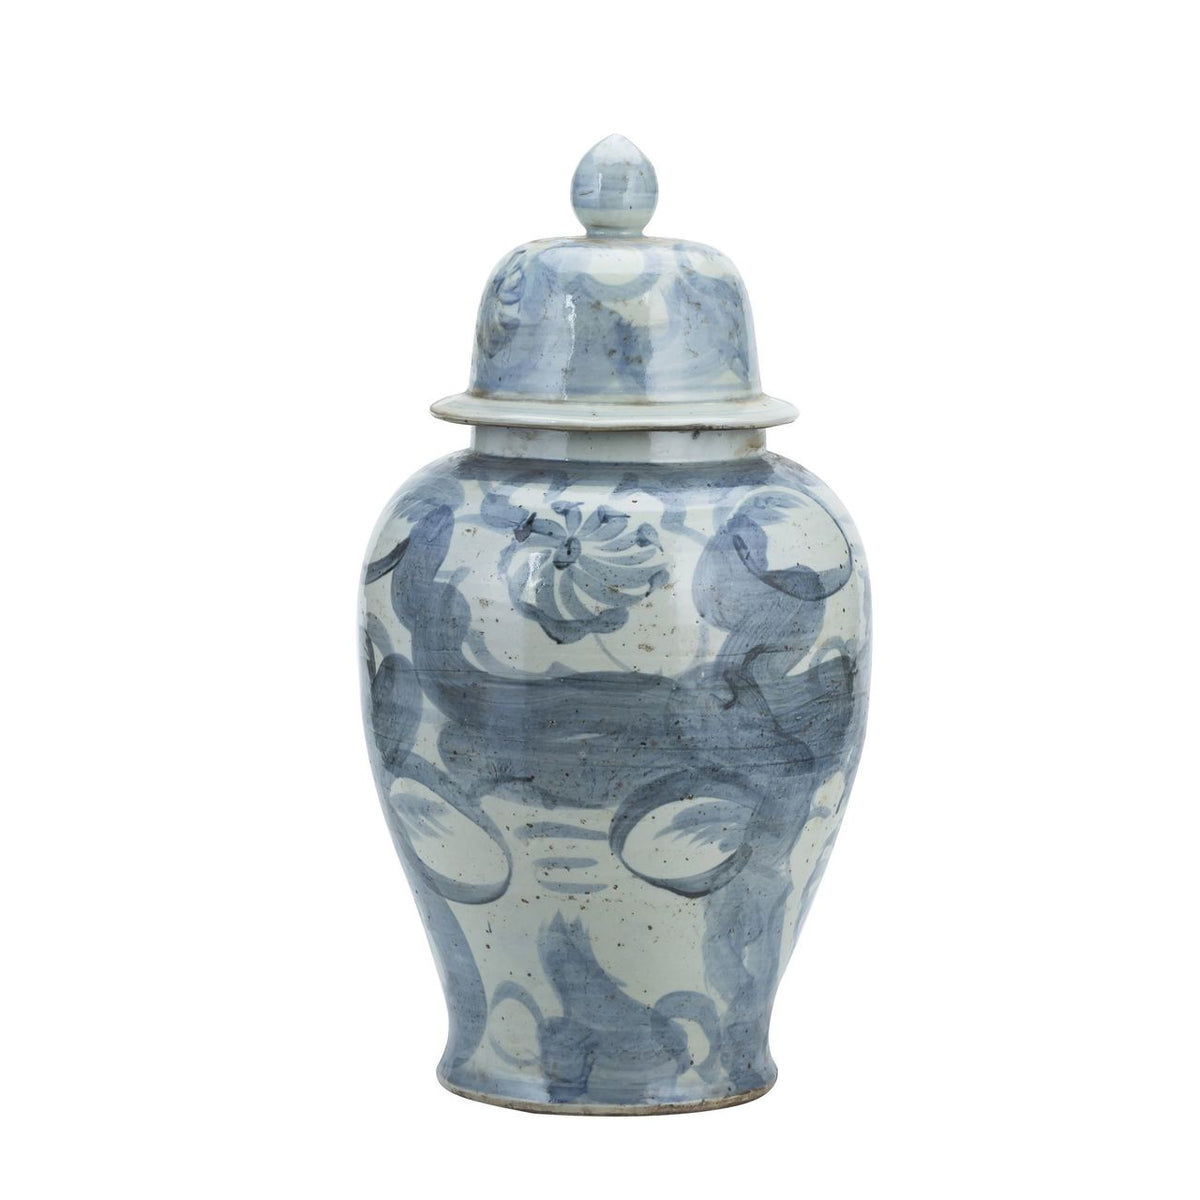 Indigo blue flower temple jar with lid